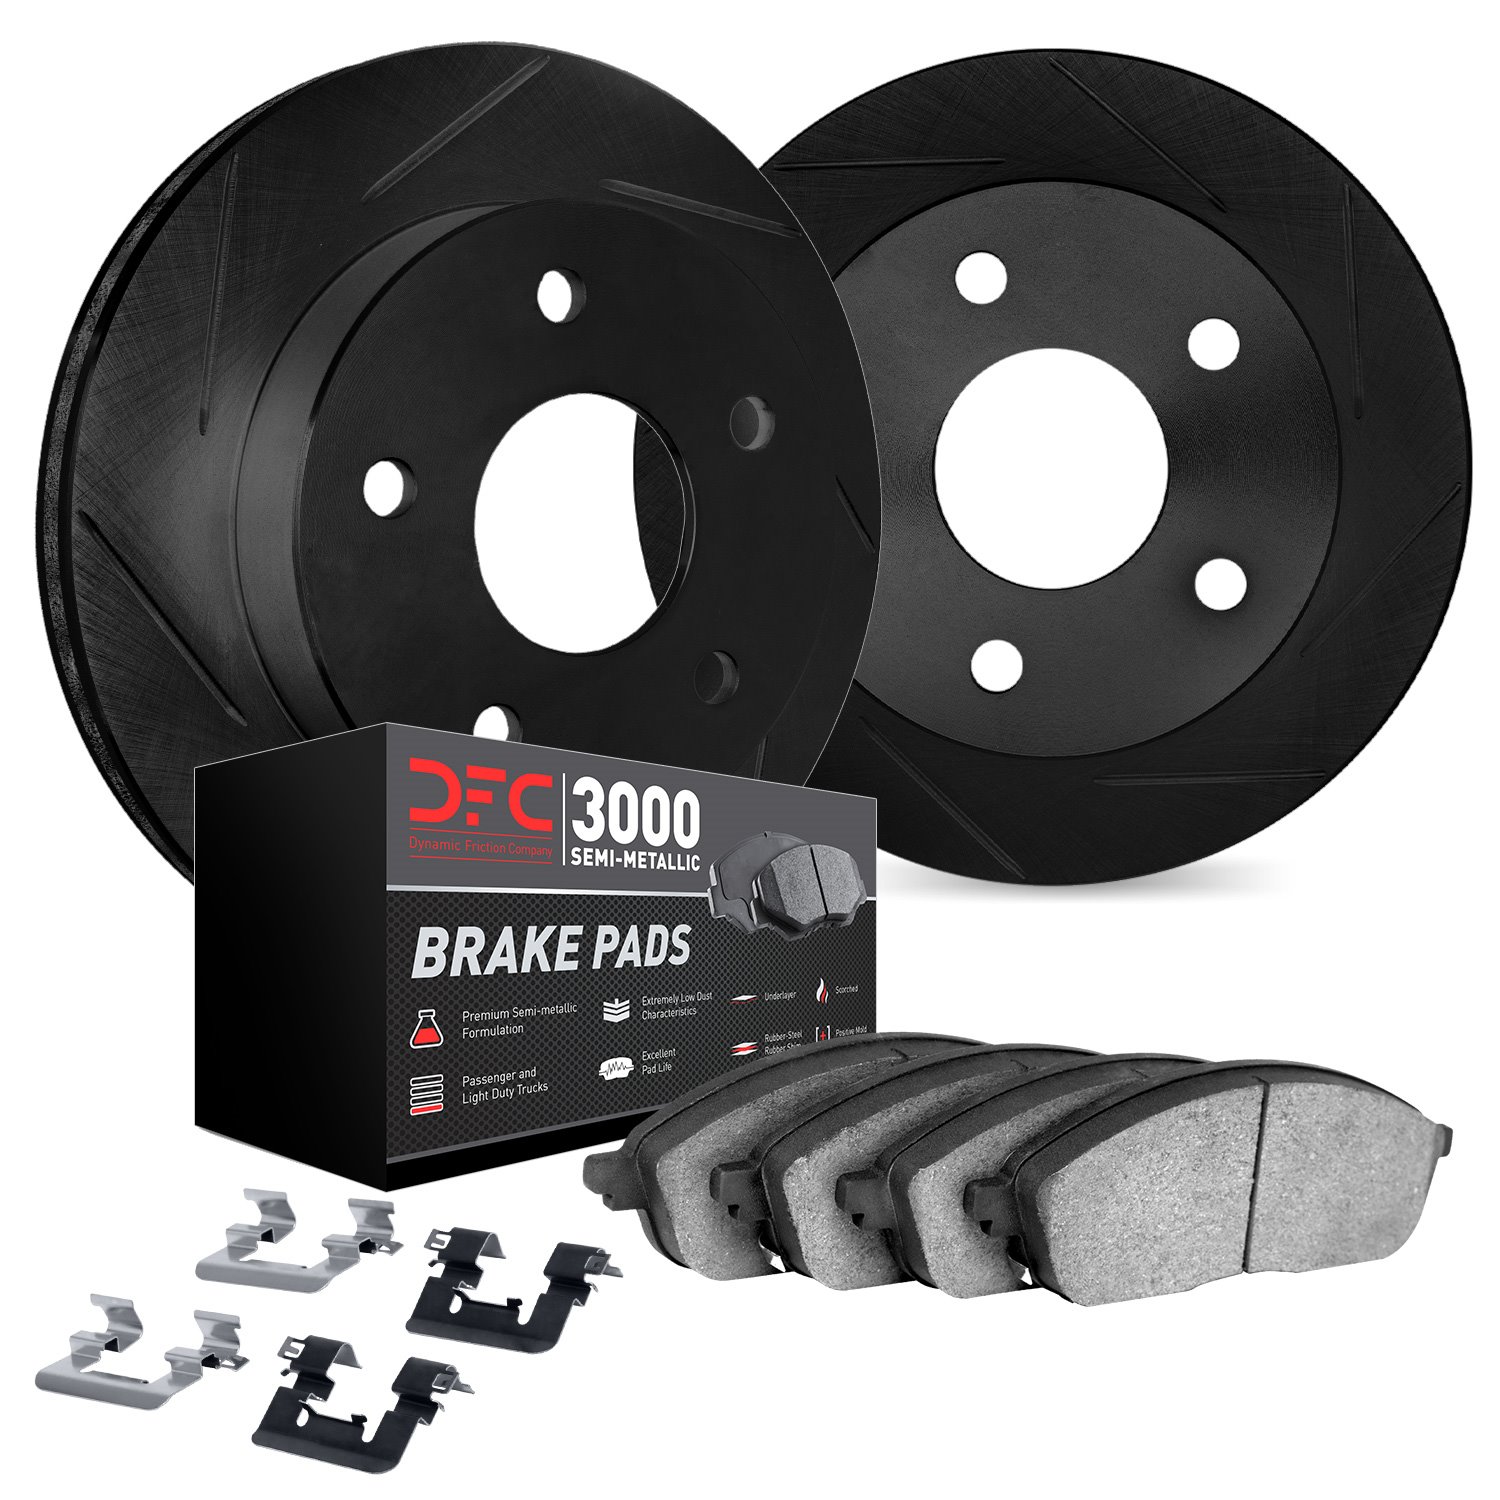 3112-59068 Slotted Brake Rotors with 3000-Series Semi-Metallic Brake Pads Kit & Hardware [Black], 2012-2016 Acura/Honda, Positio